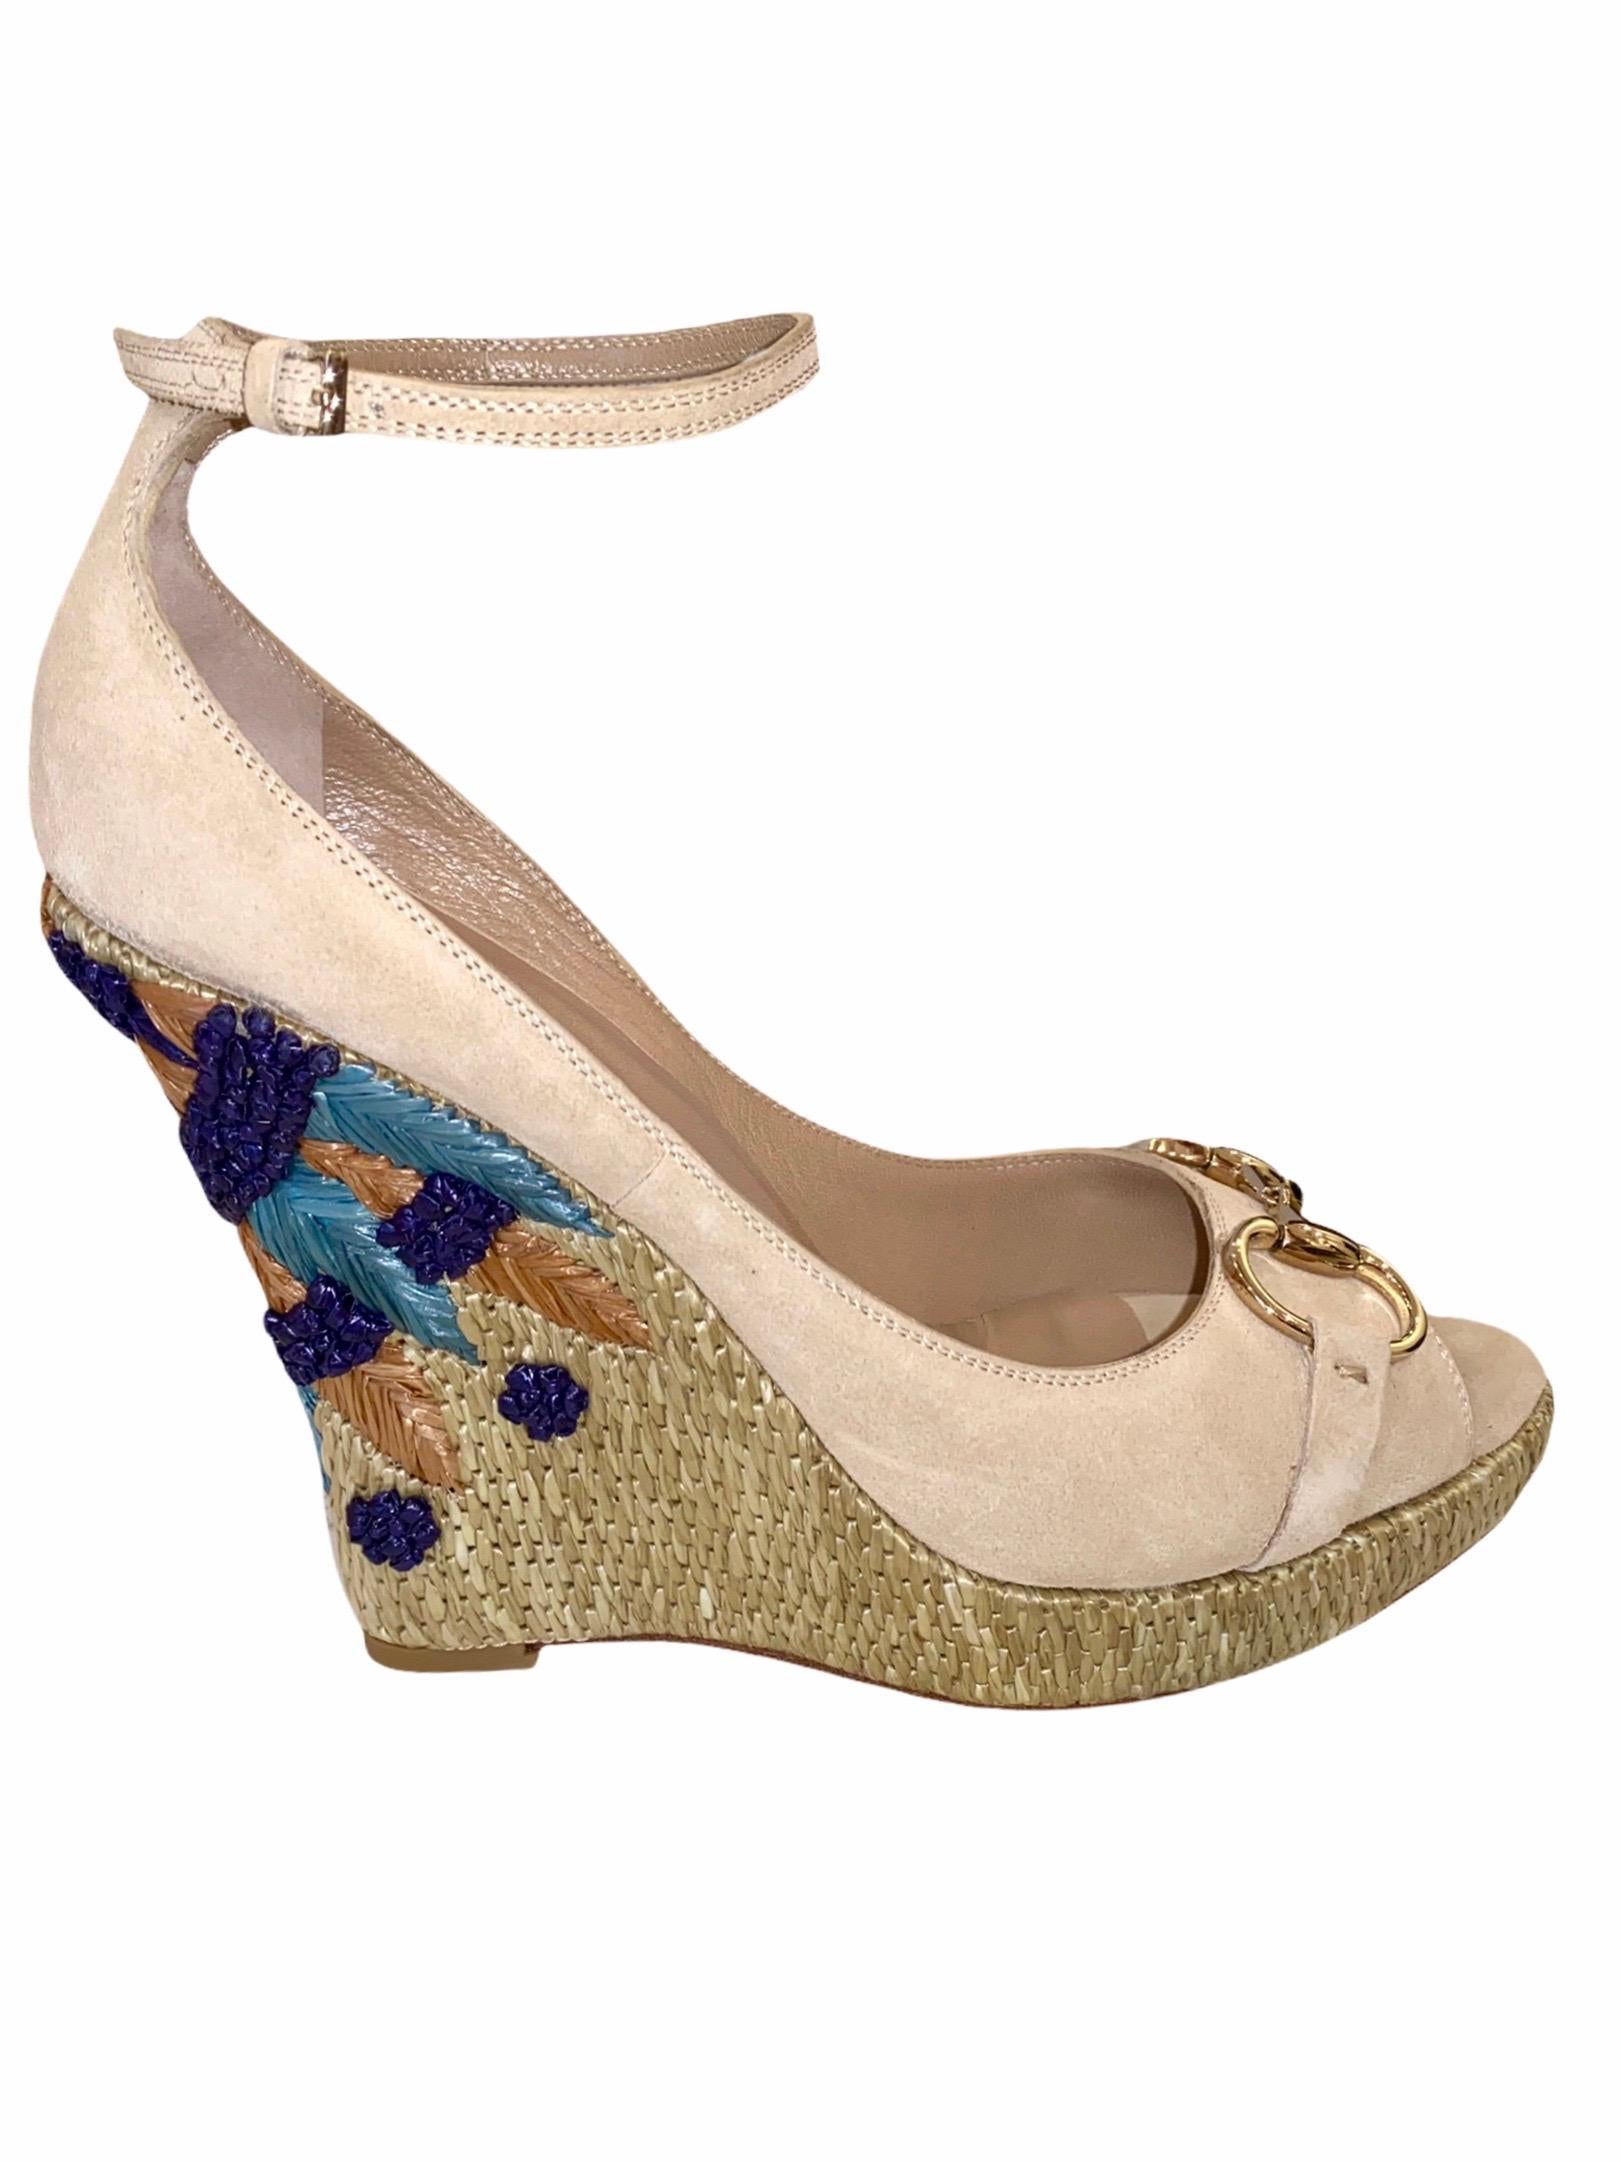 NEW Gucci Embroidered Floral Suede Horsebit Platform Wedge Sandals High Heels 8 For Sale 1